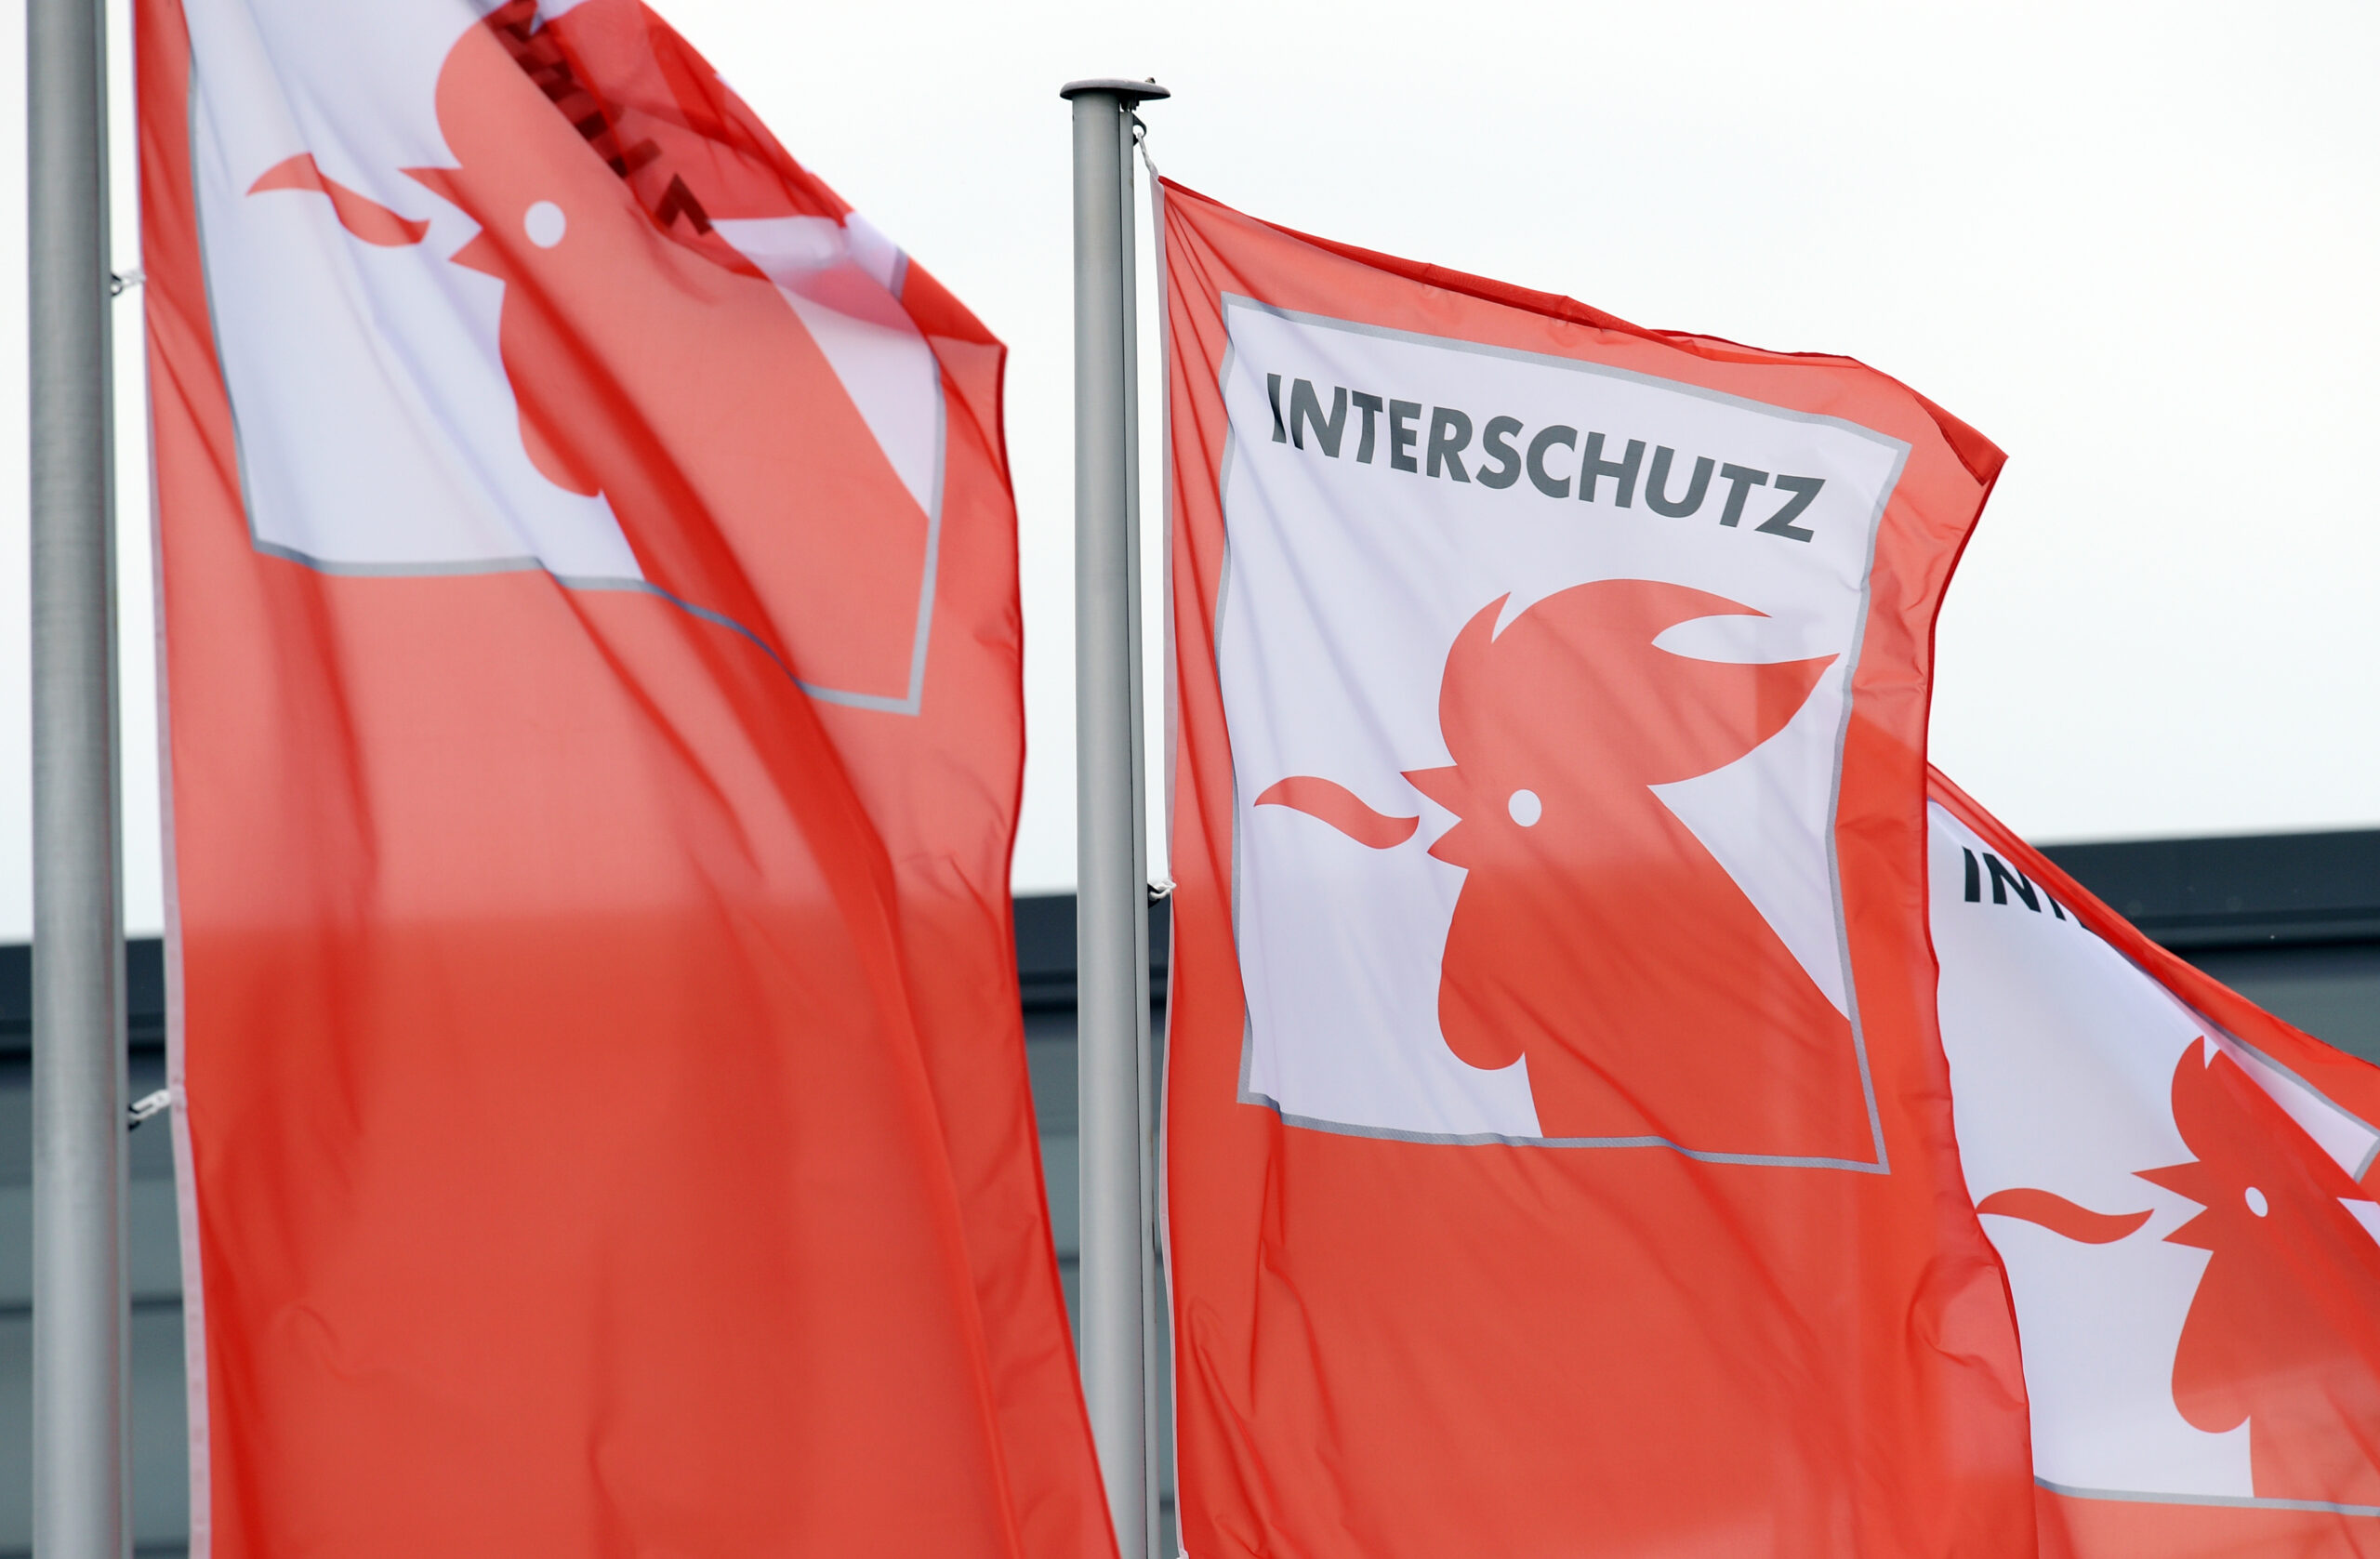 INTERSCHUTZ postponed by one year – new date in June 2021